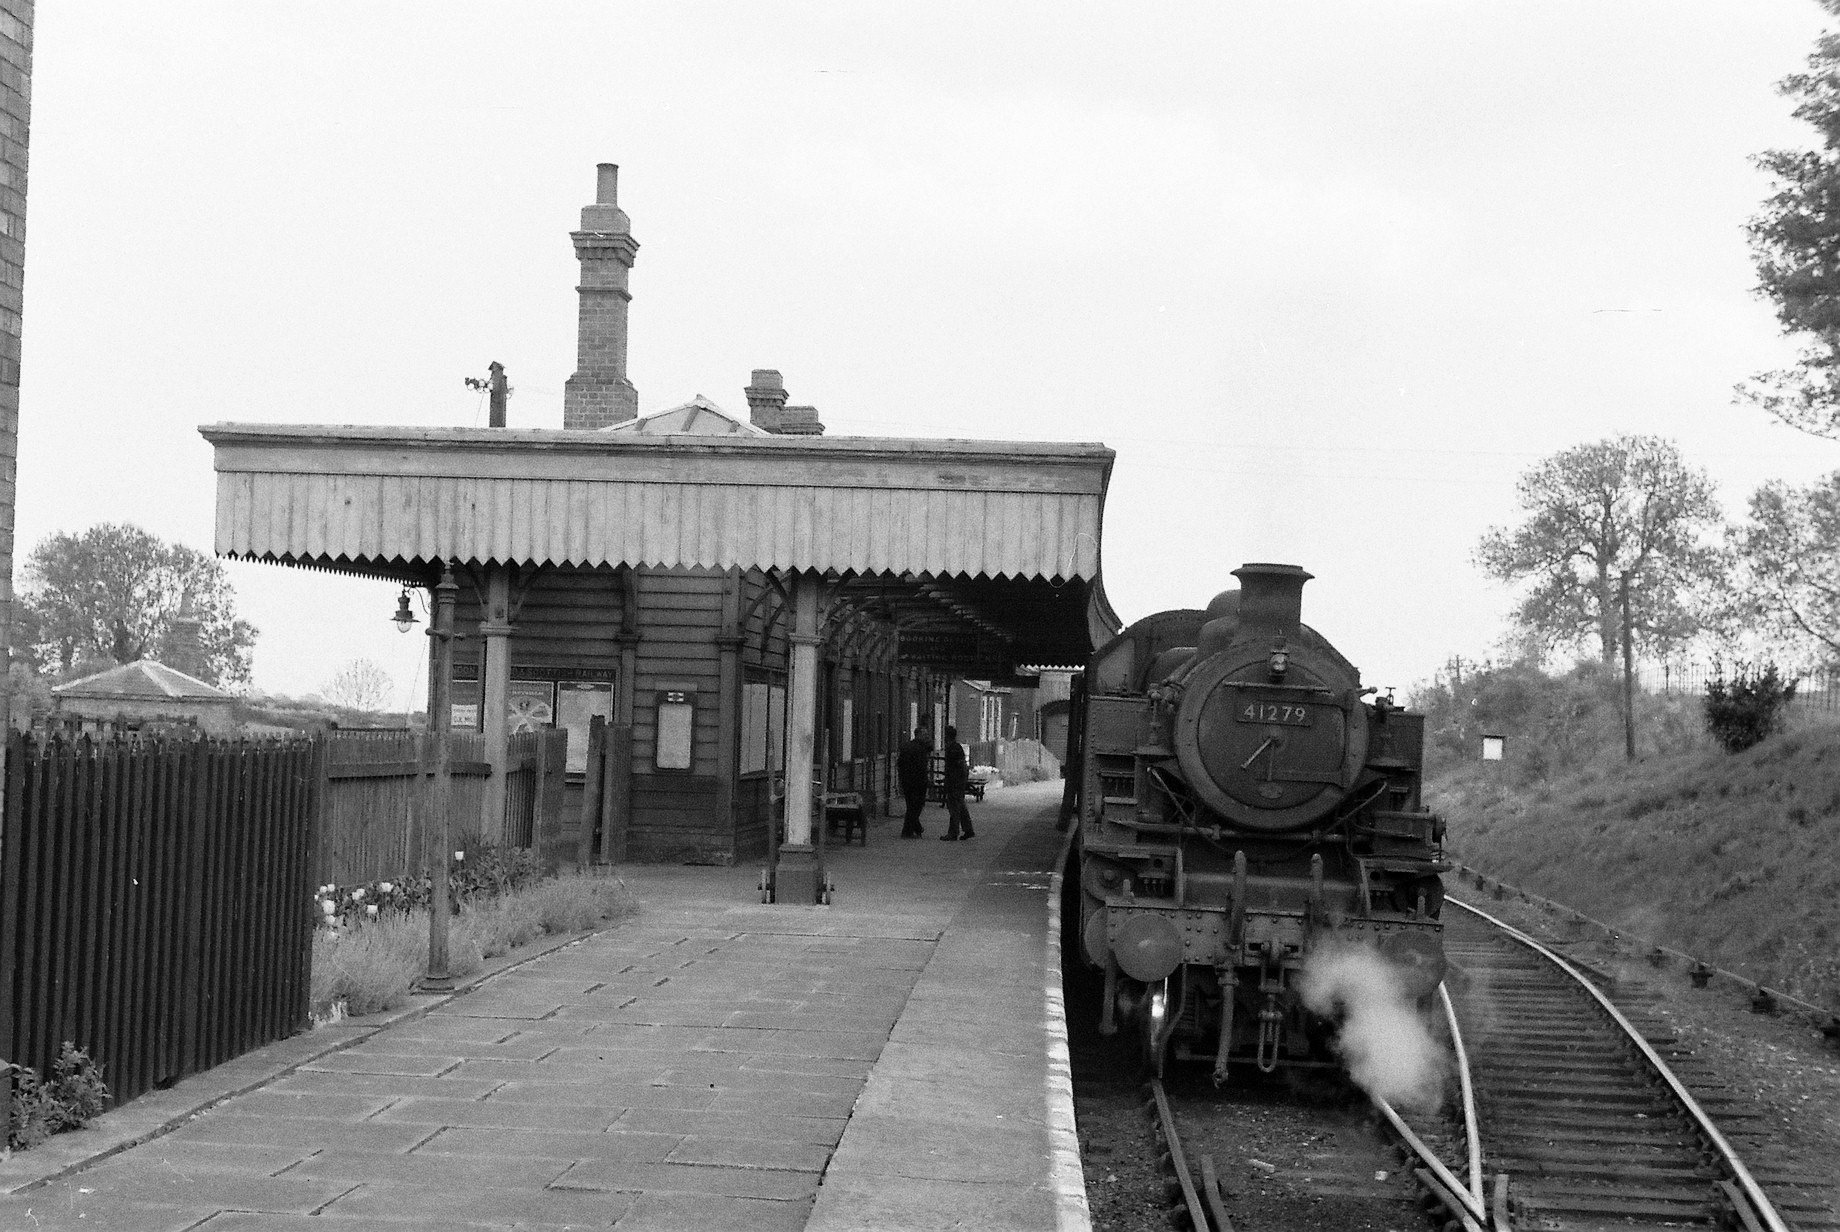 Uppingham railway station